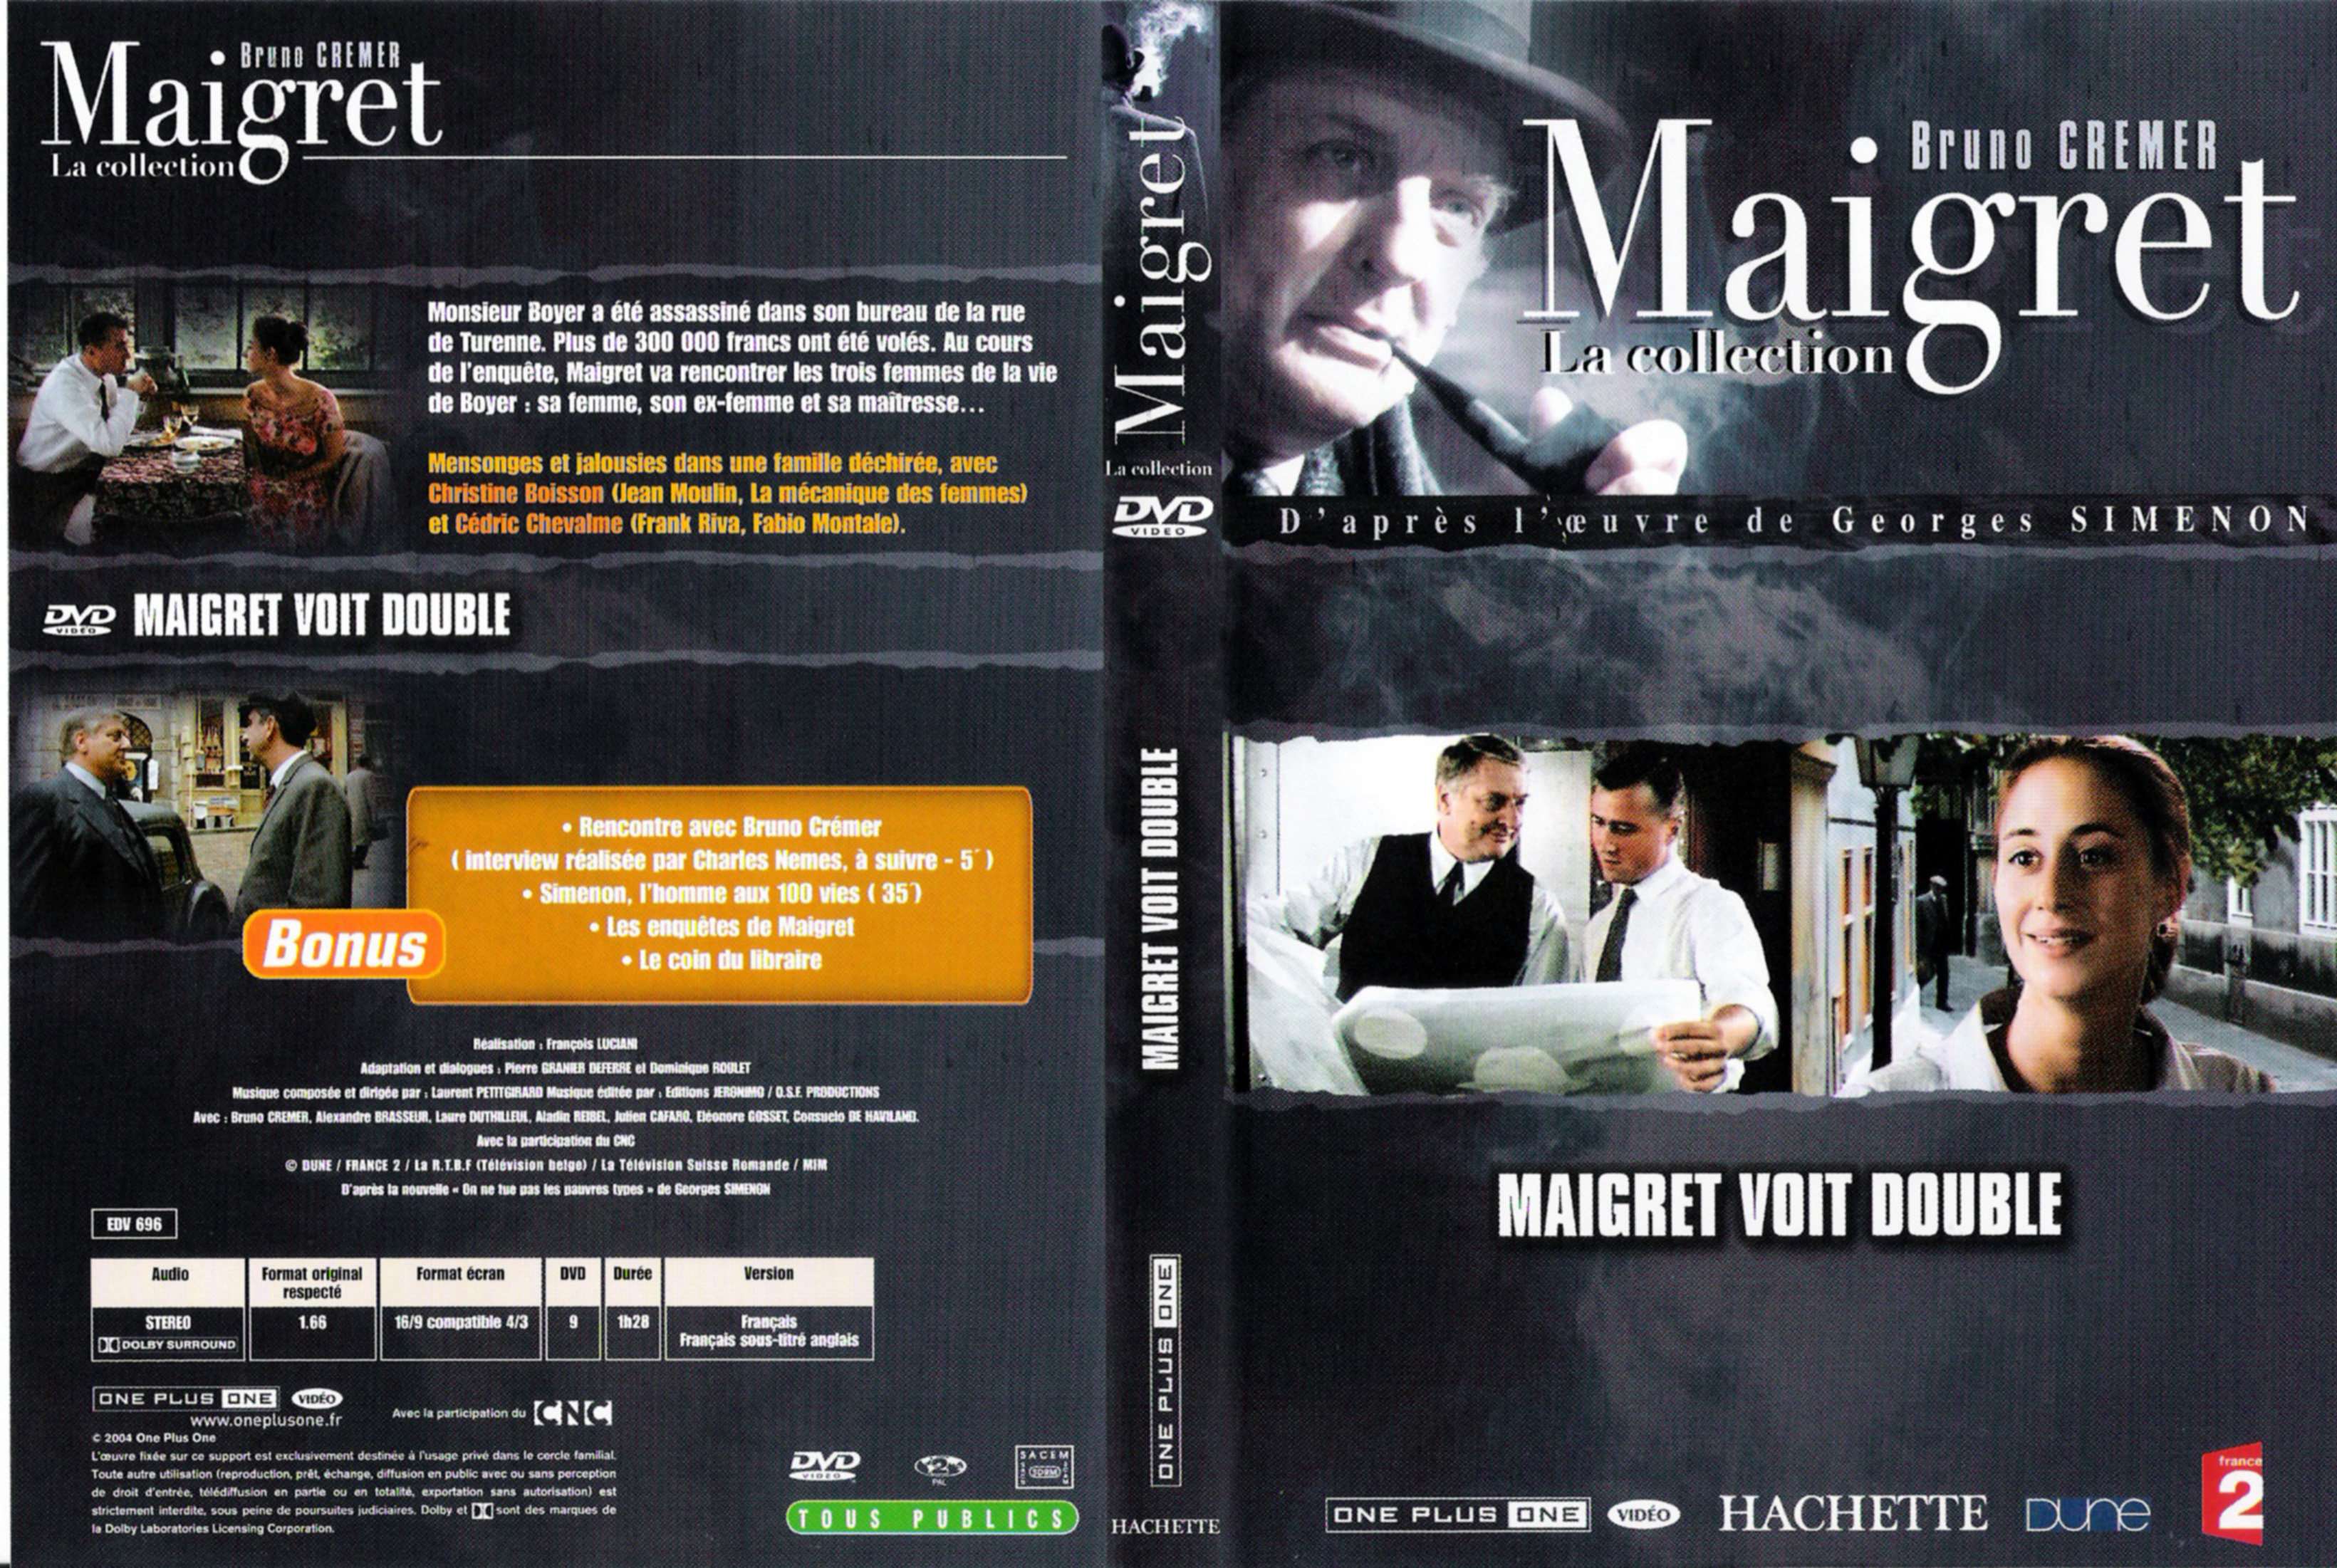 Jaquette DVD Maigret voit double (Bruno Cremer)